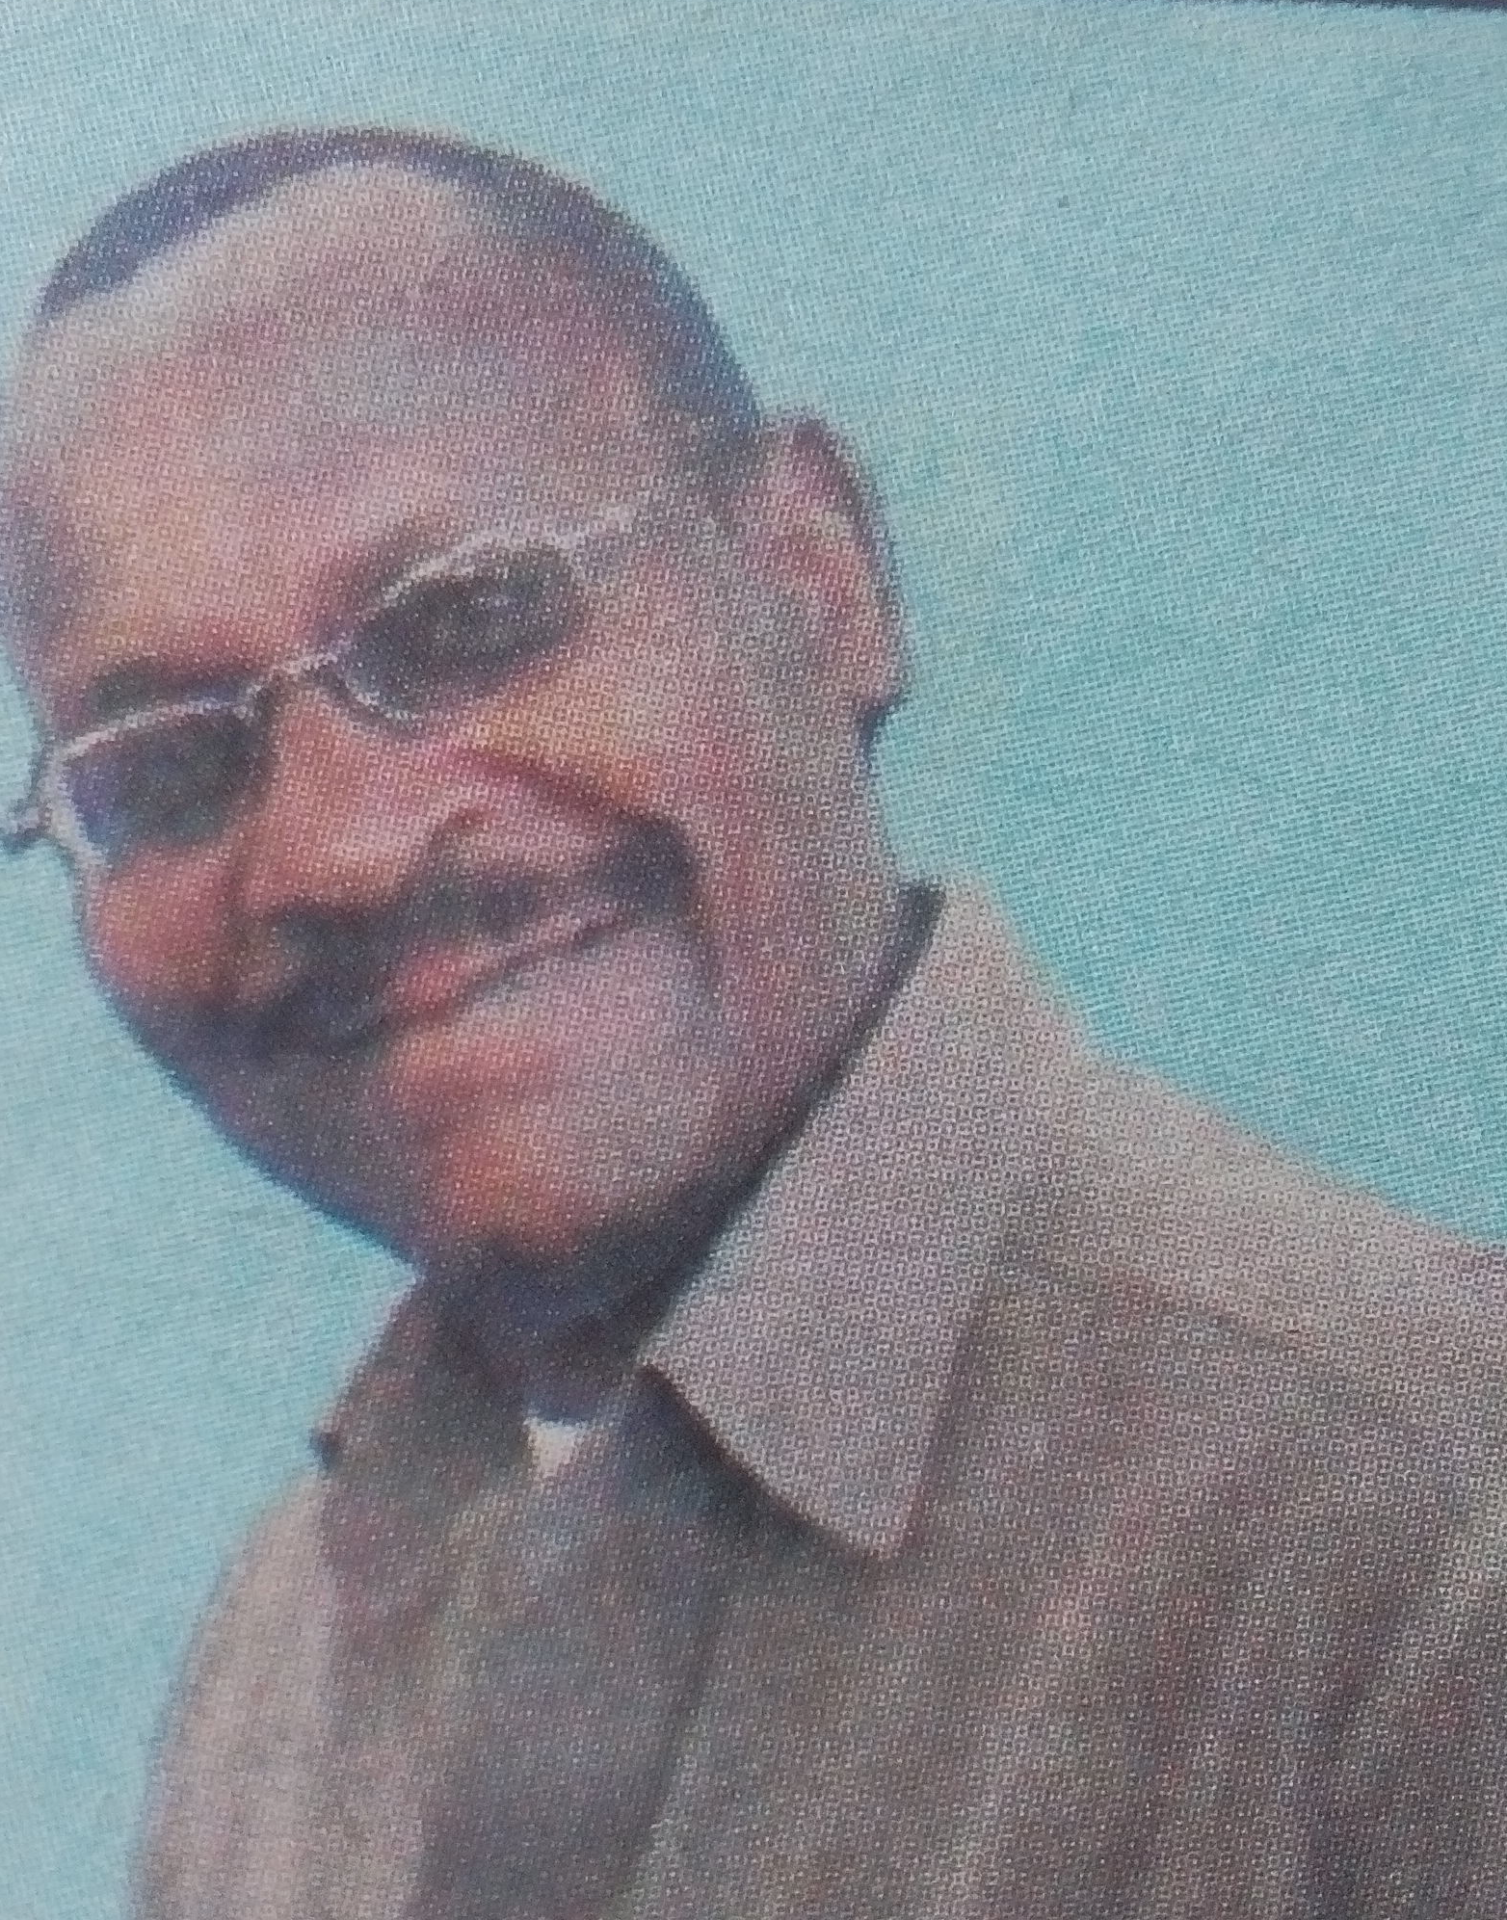 Obituary Image of Simeon Nyakado Diang'a (Rtd, Kenya Revenue Authority)